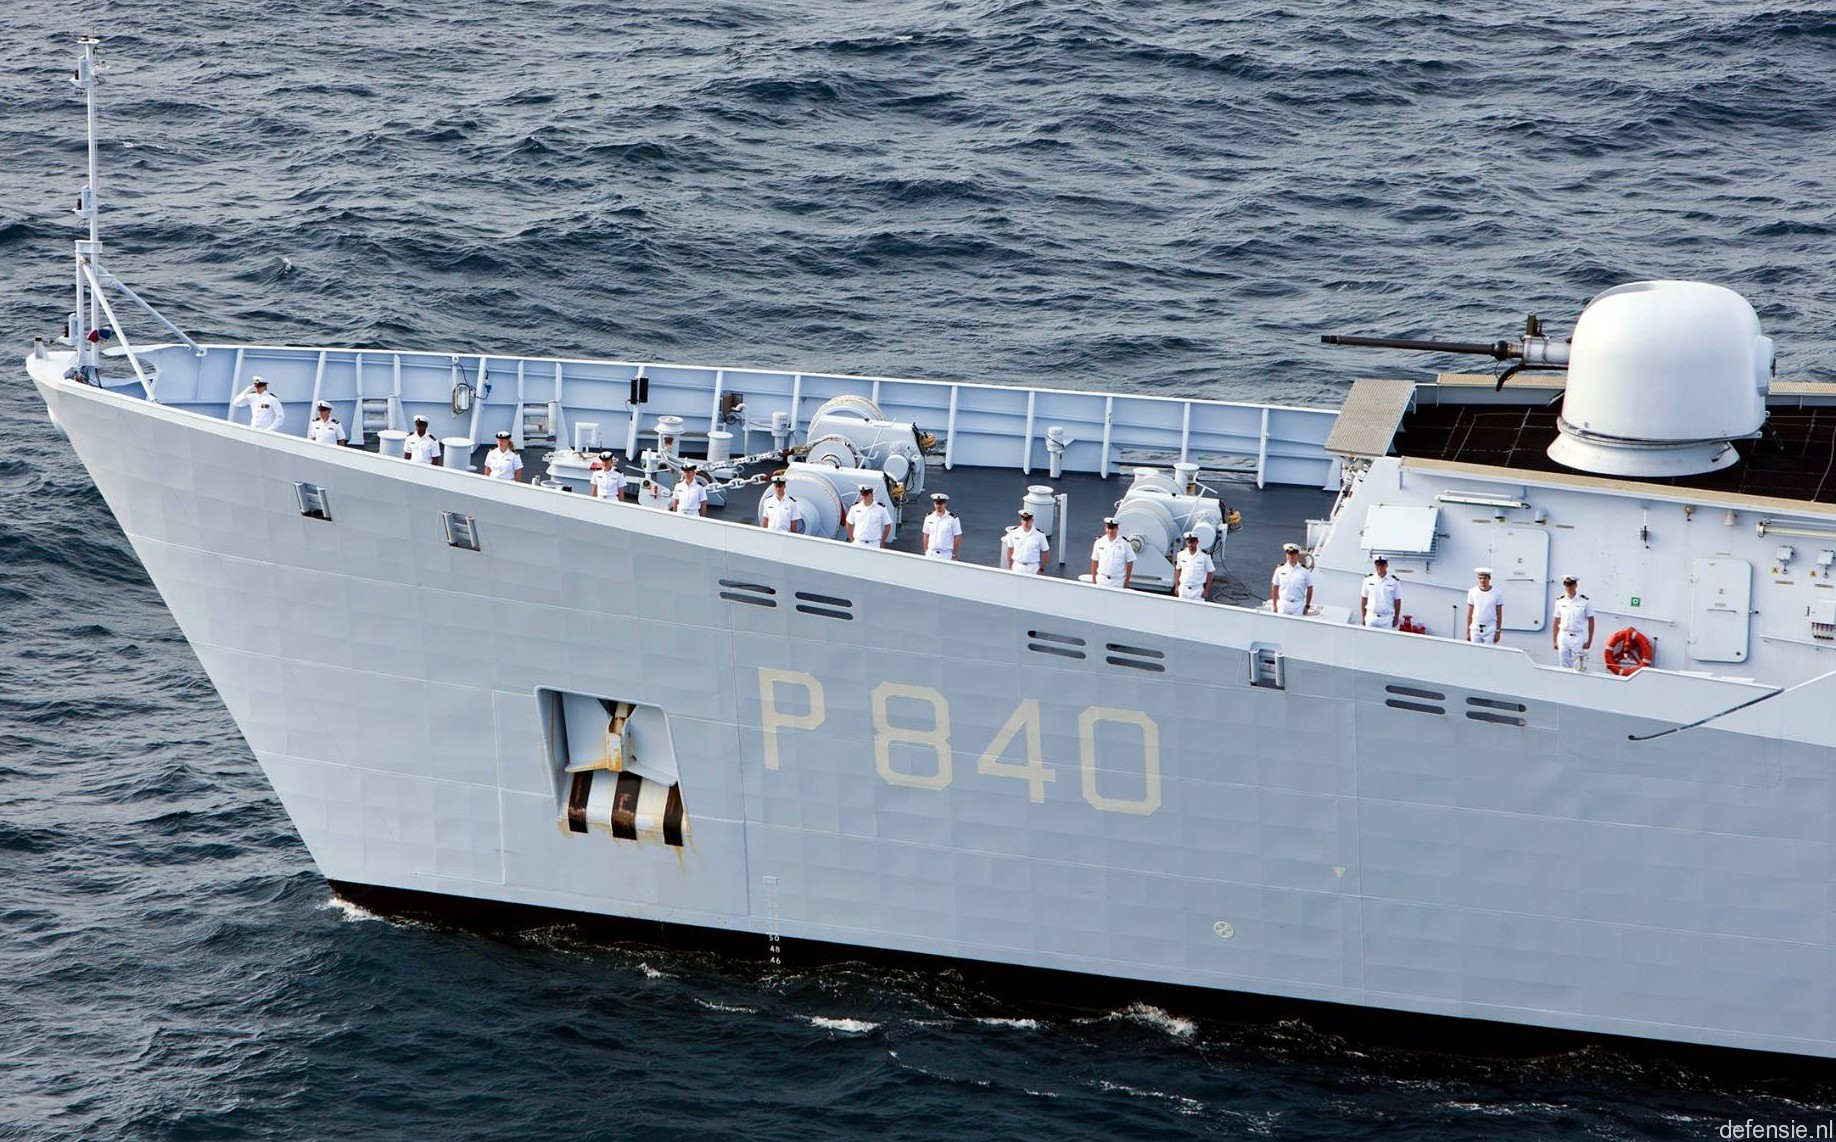 p-840 hnlms holland offshore patrol vessel opv royal netherlands navy 26 oto melara leonardo 76/62 gun